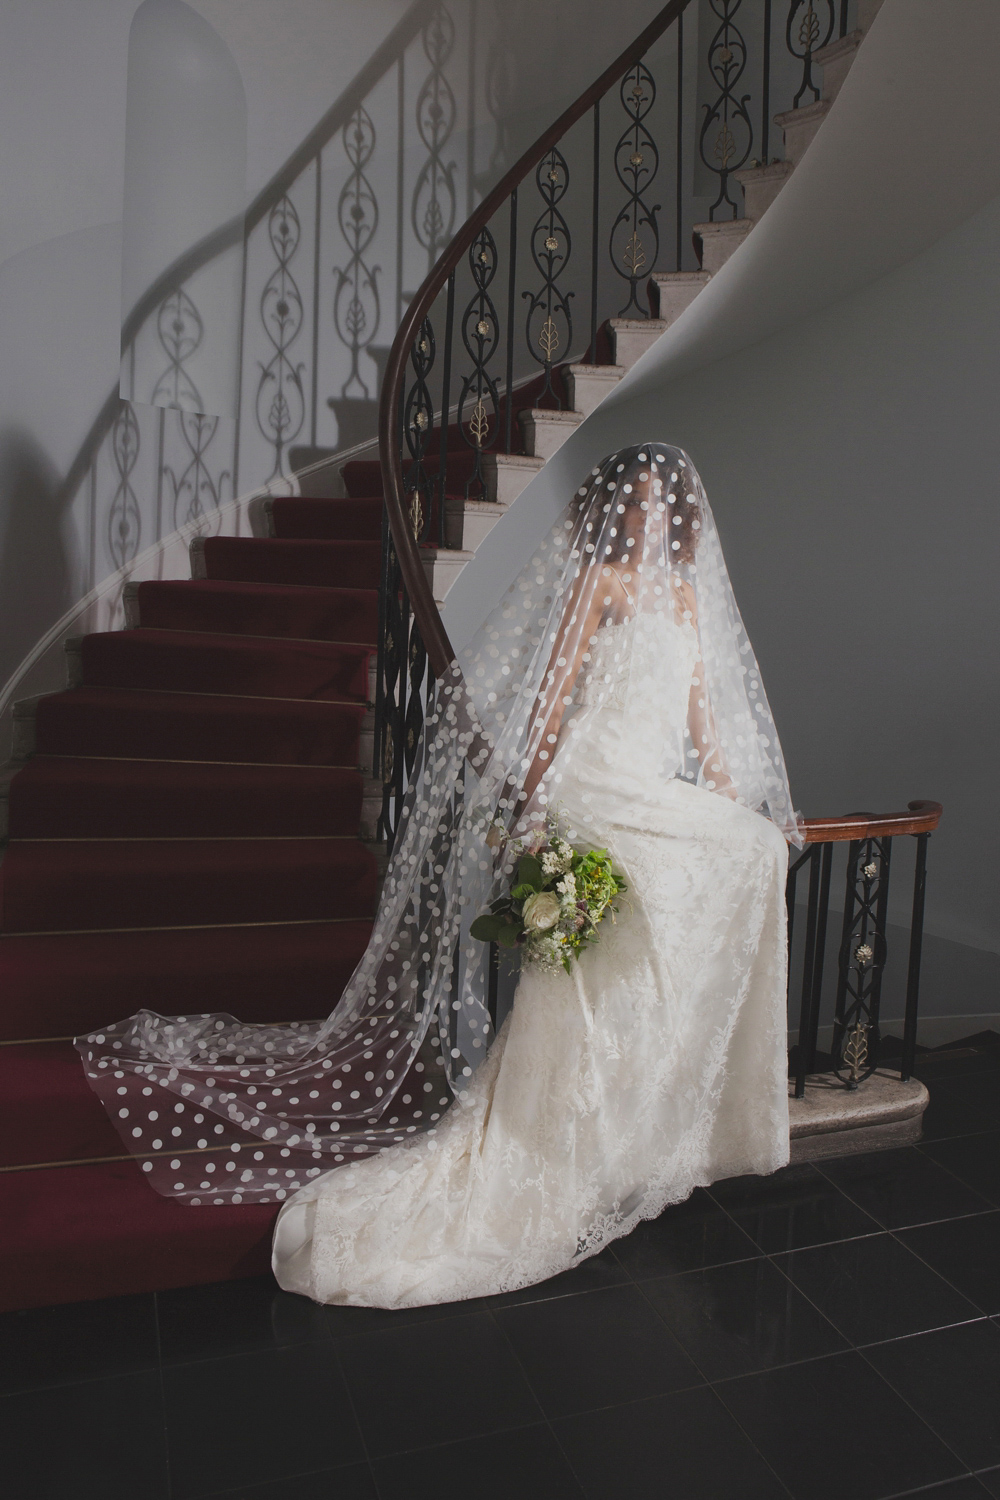 Exquisite, elegant wedding veils by Halfpenny London.